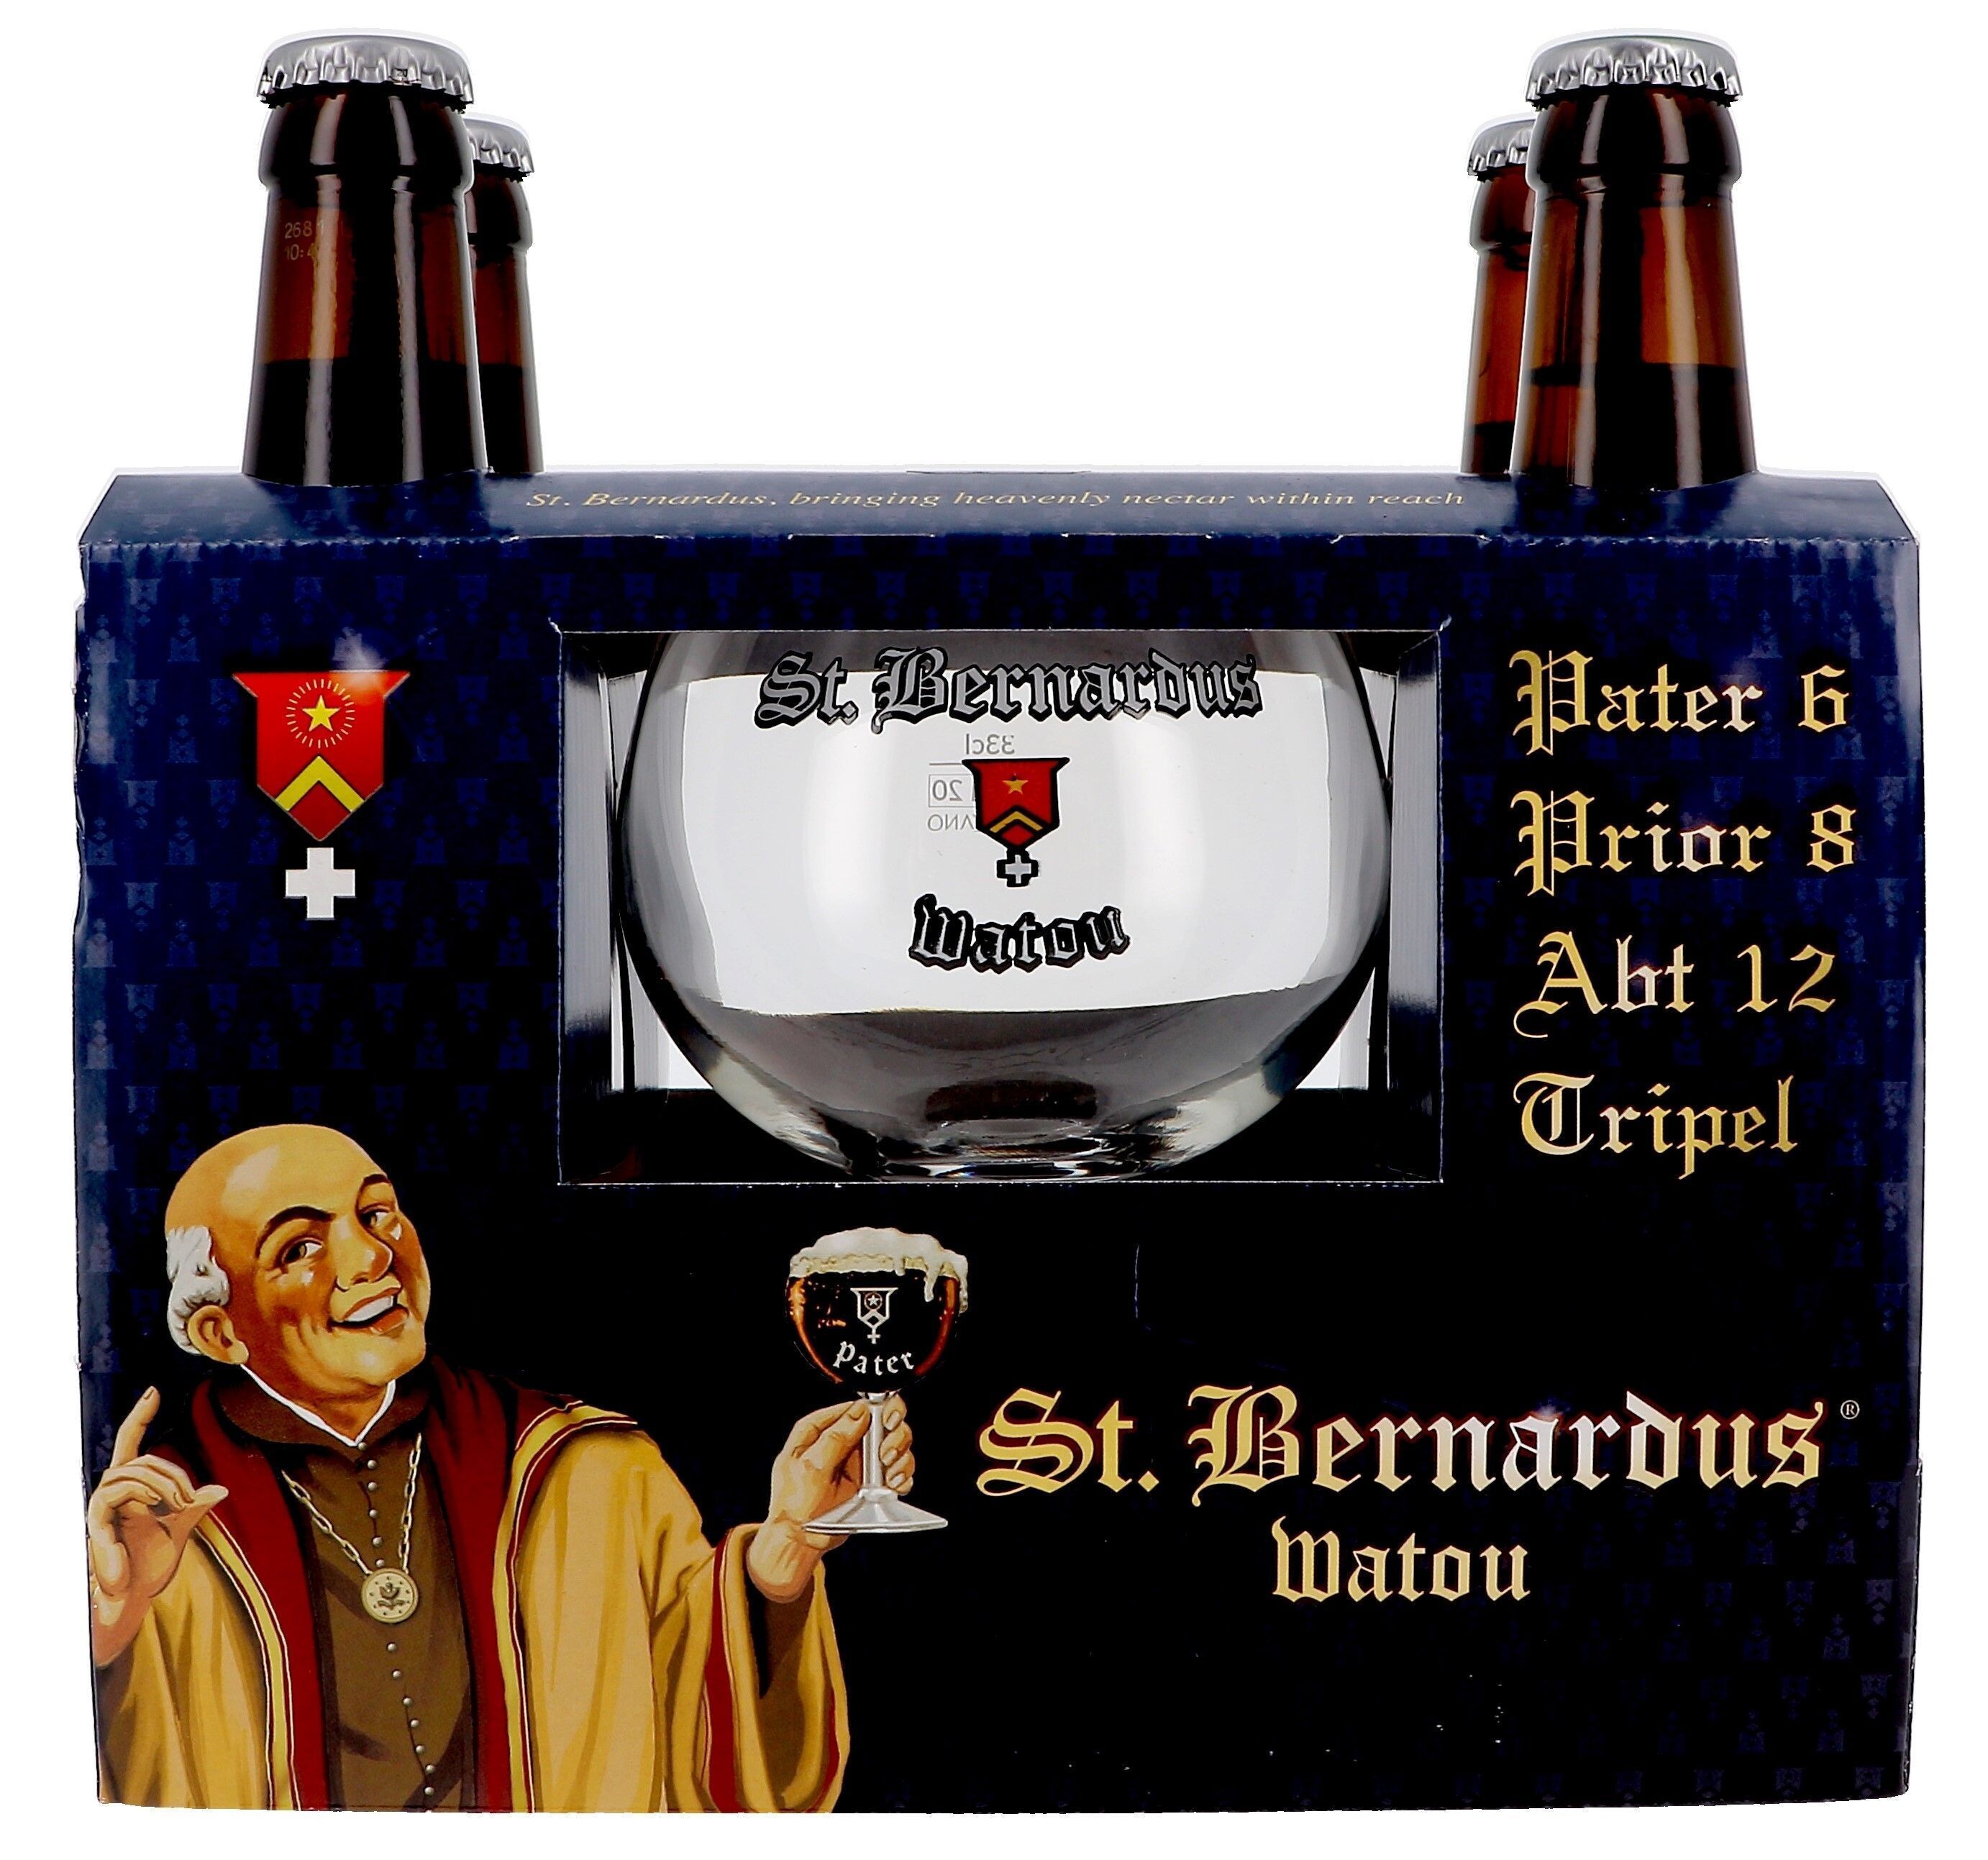 St. Bernardus 4x33cl + 1 glass in giftbox